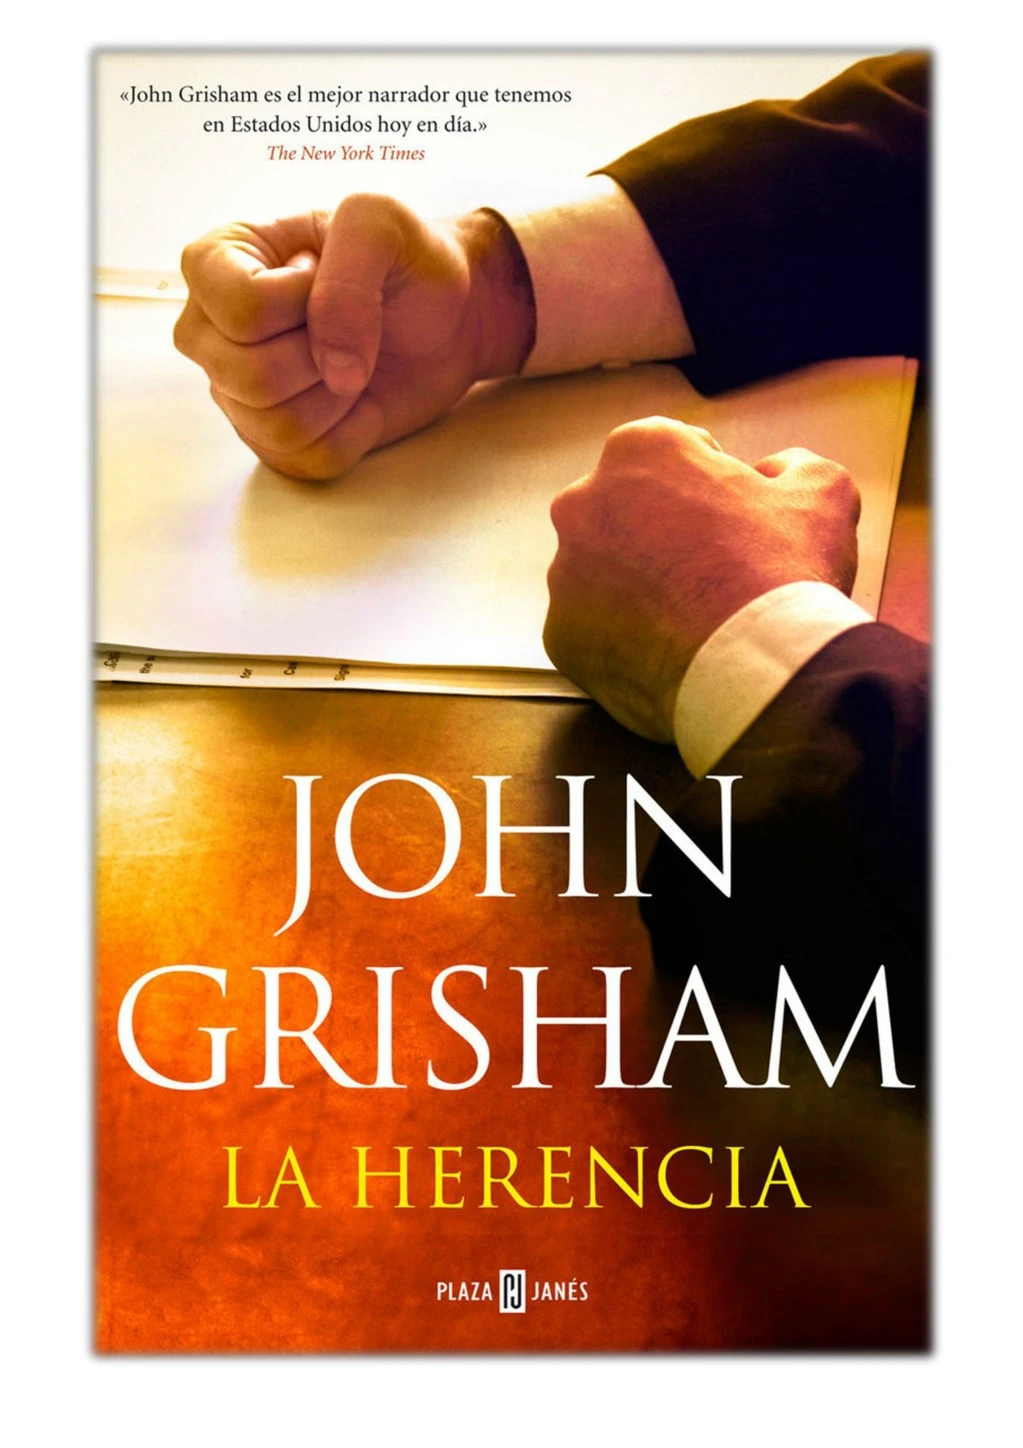 PPT [PDF] Free Download La herencia By John Grisham PowerPoint Presentation ID7937318